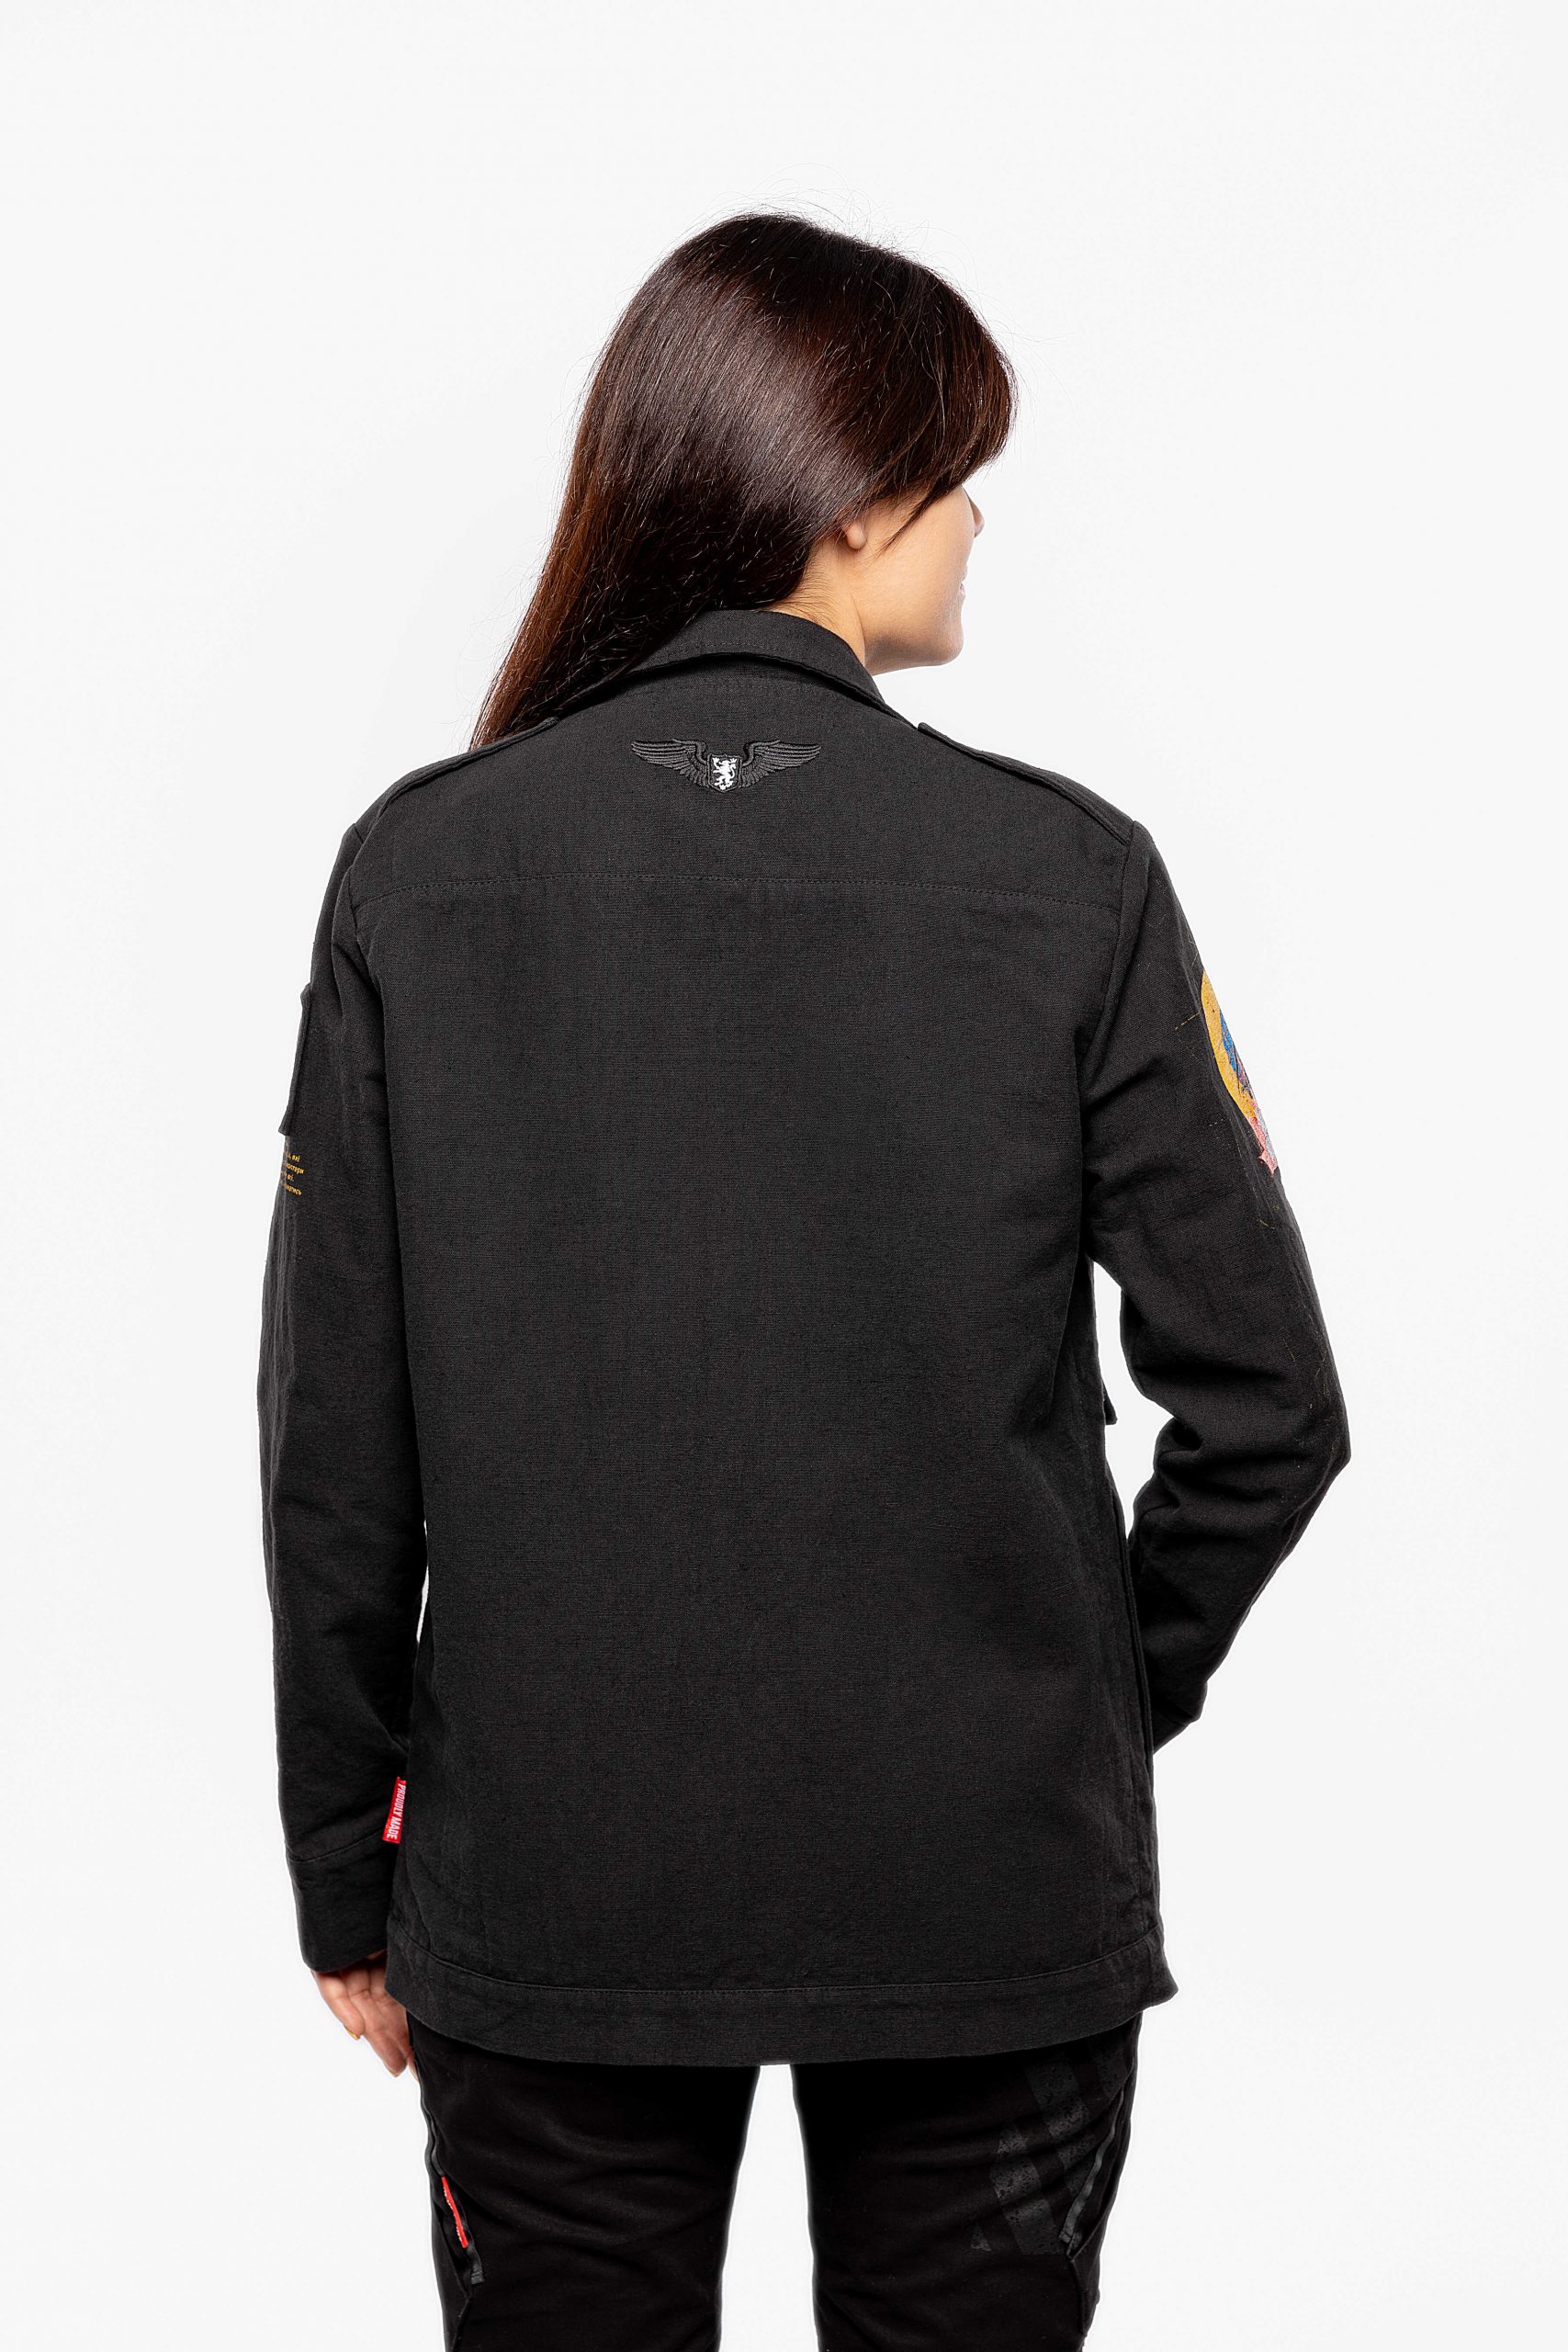 Women's Shirt-Jacket Mission Mariupol. Color black.  Unisex shirt-jacket (men's sizes).